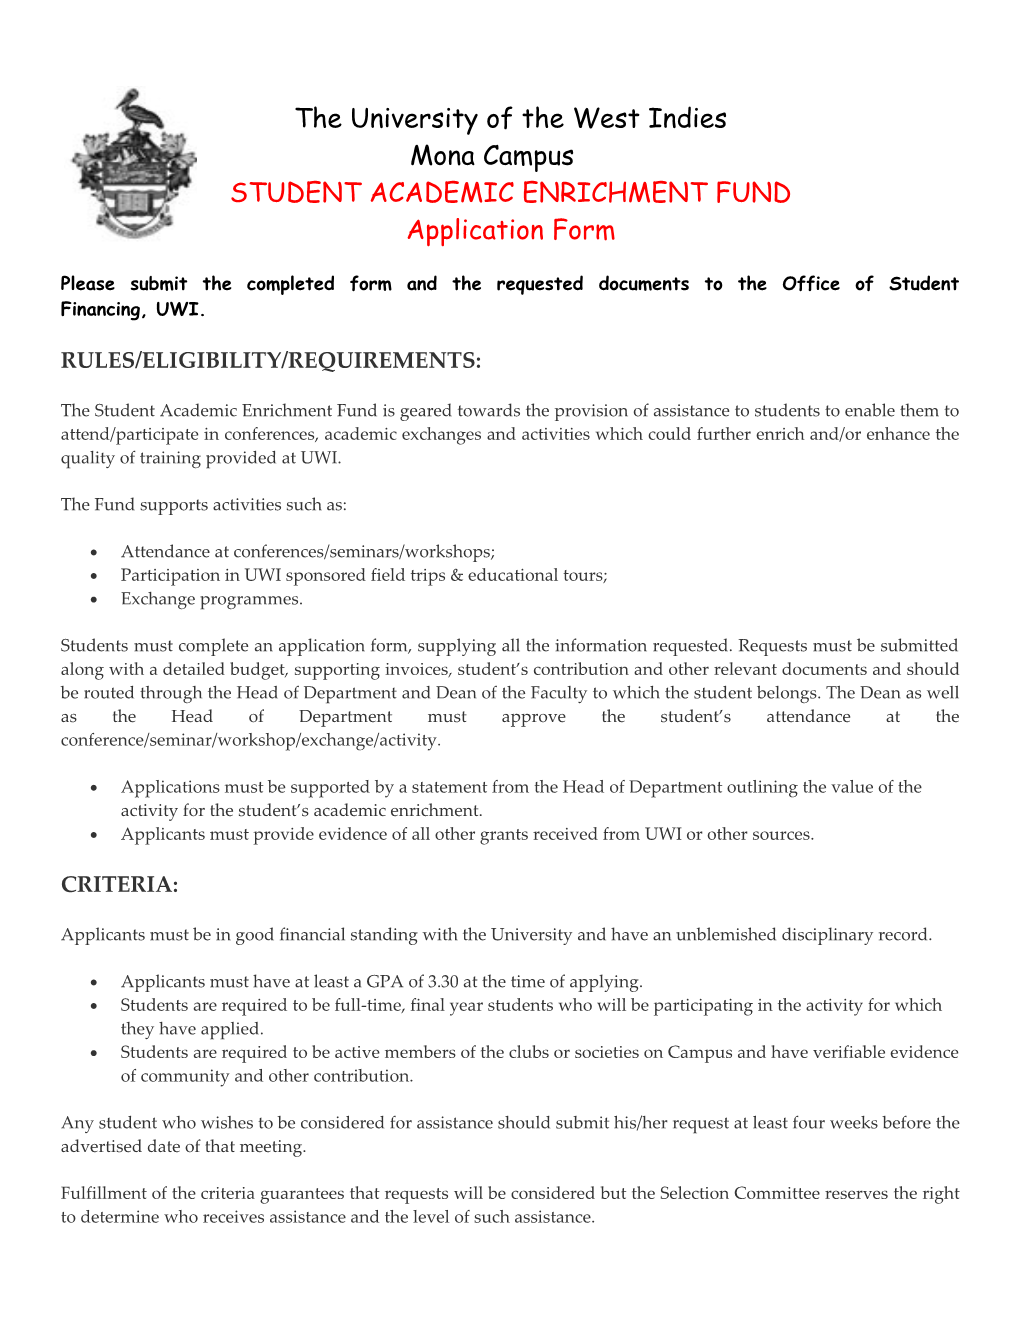 Student Academic Enrichment Fund